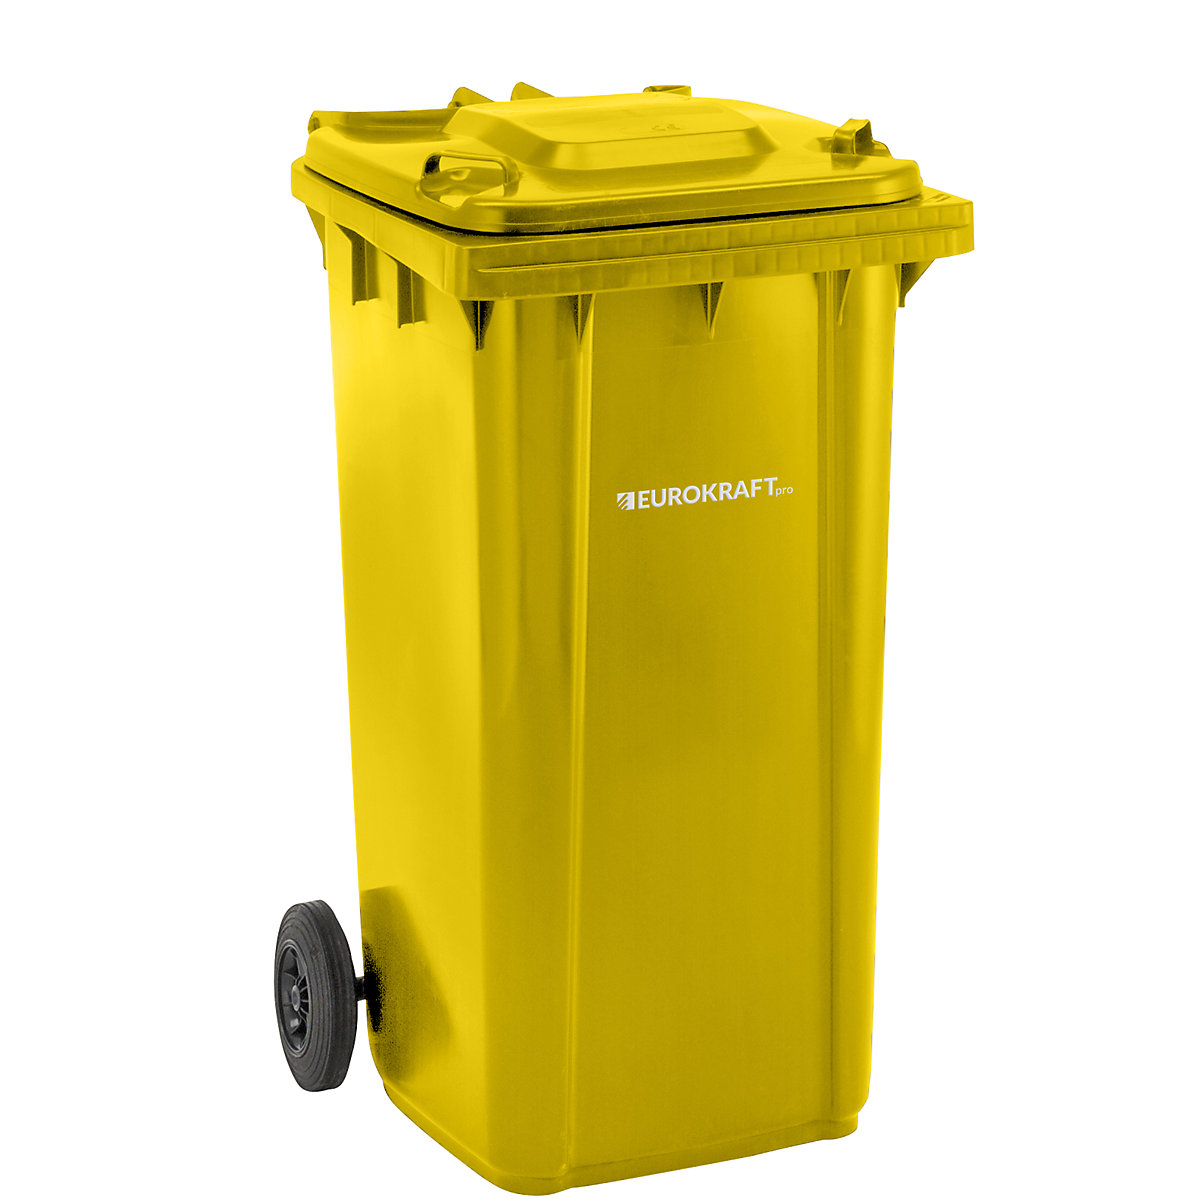 Mülltonne aus Kunststoff DIN EN 840 eurokraft pro, Volumen 240 l, BxHxT 580 x 1100 x 740 mm, gelb, ab 5 Stk